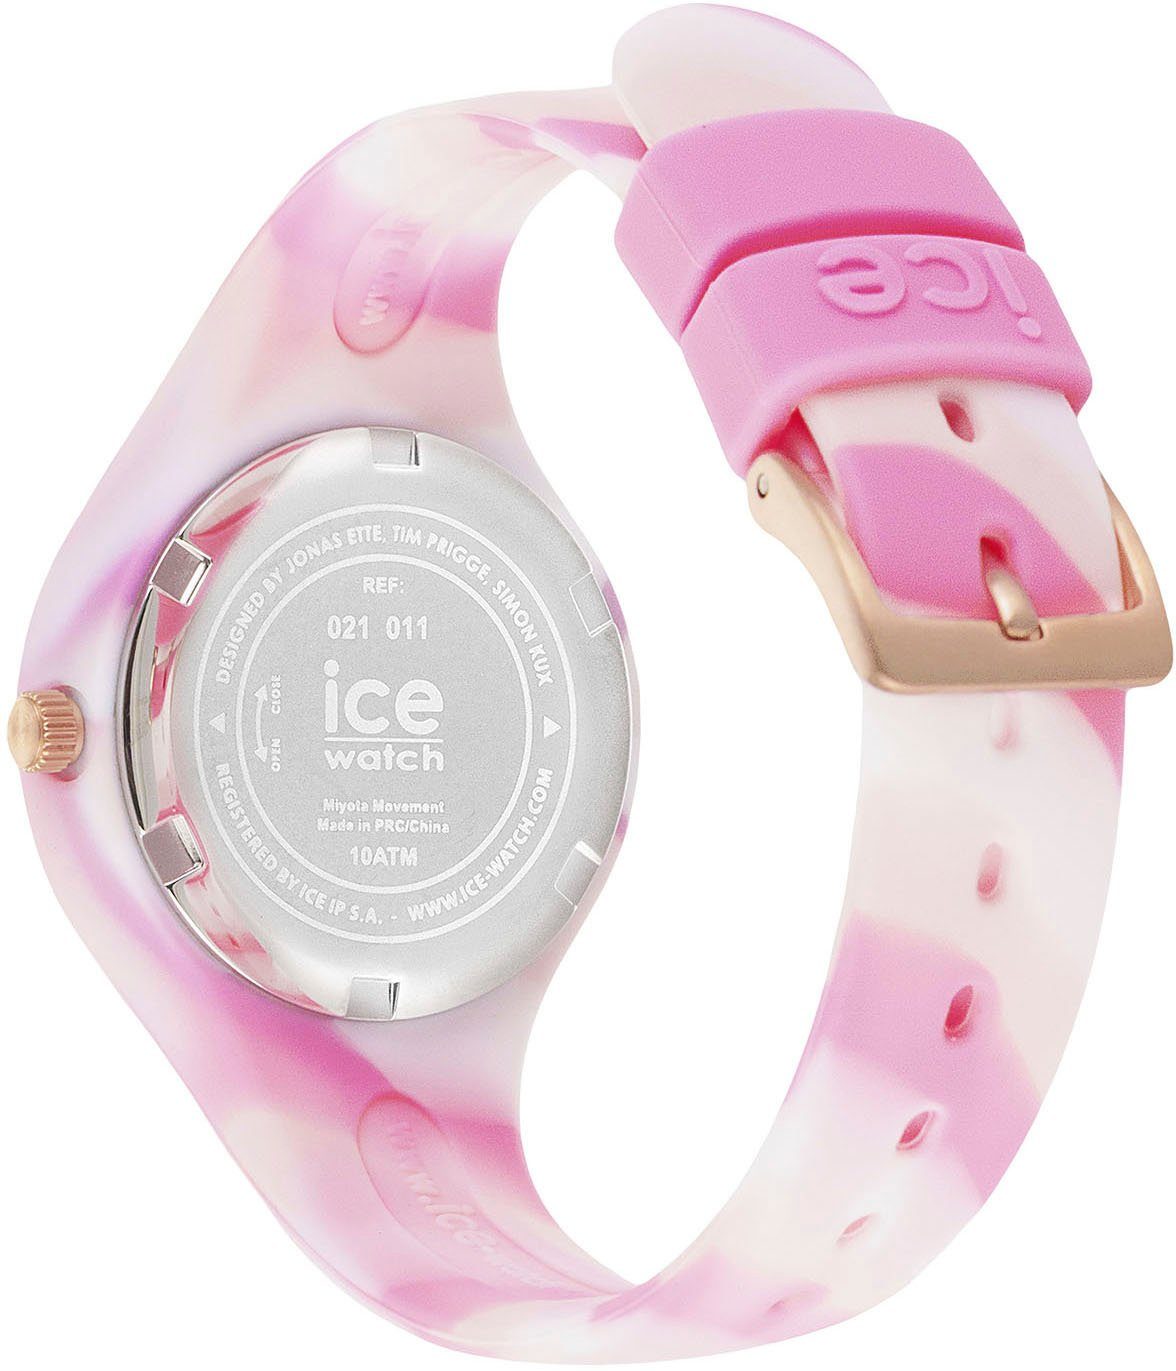 ice-watch Quarzuhr ICE - Pink - shades ideal auch 021011, tie dye and Geschenk Extra-Small - als 3H